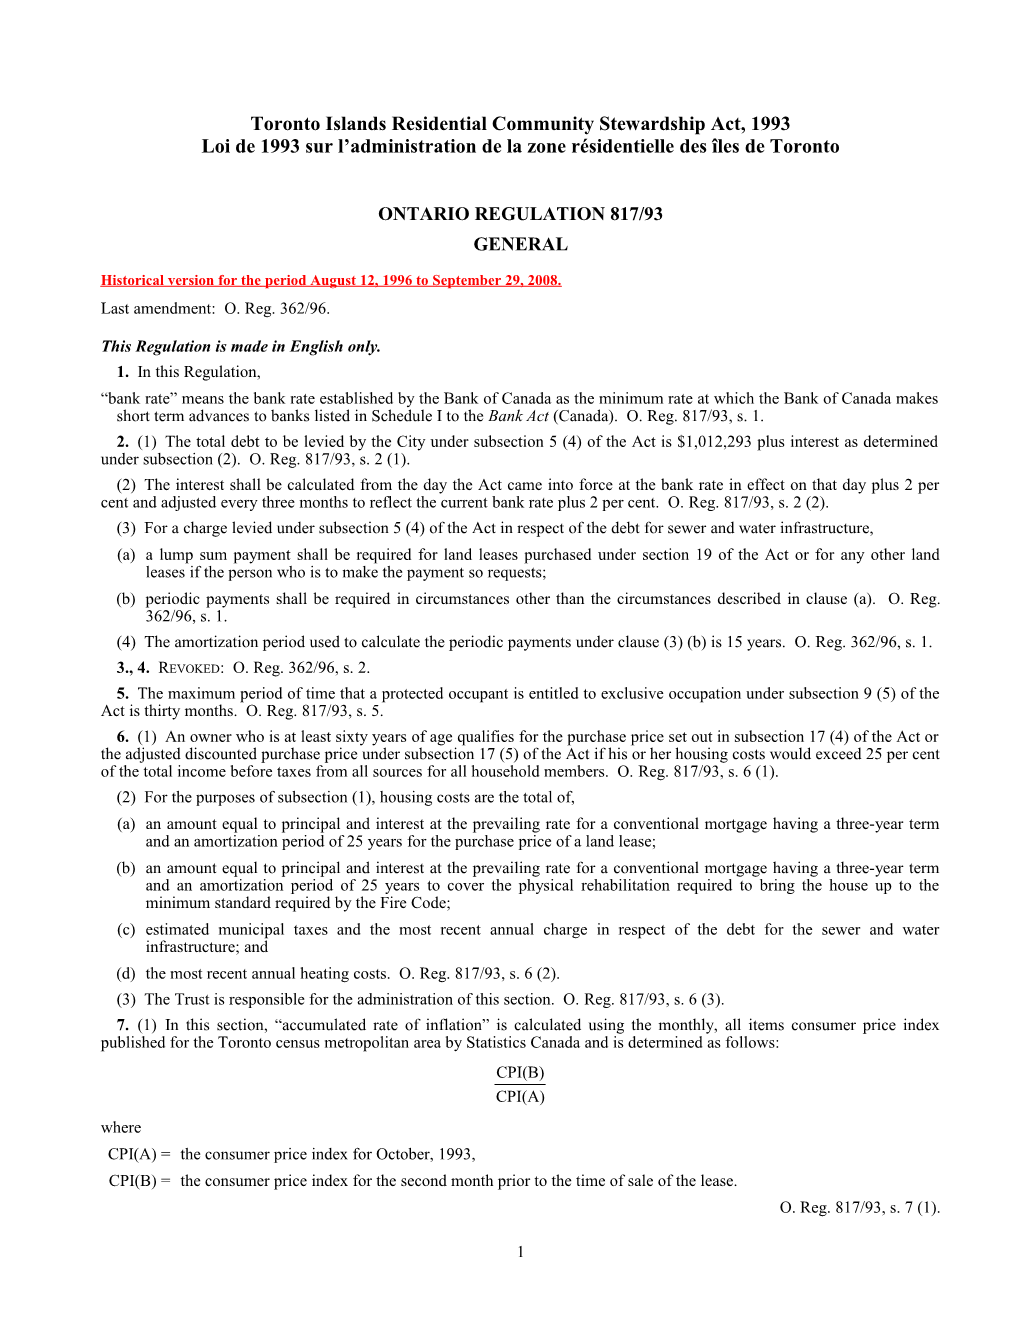 Toronto Islands Residential Community Stewardship Act, 1993 - O. Reg. 817/93